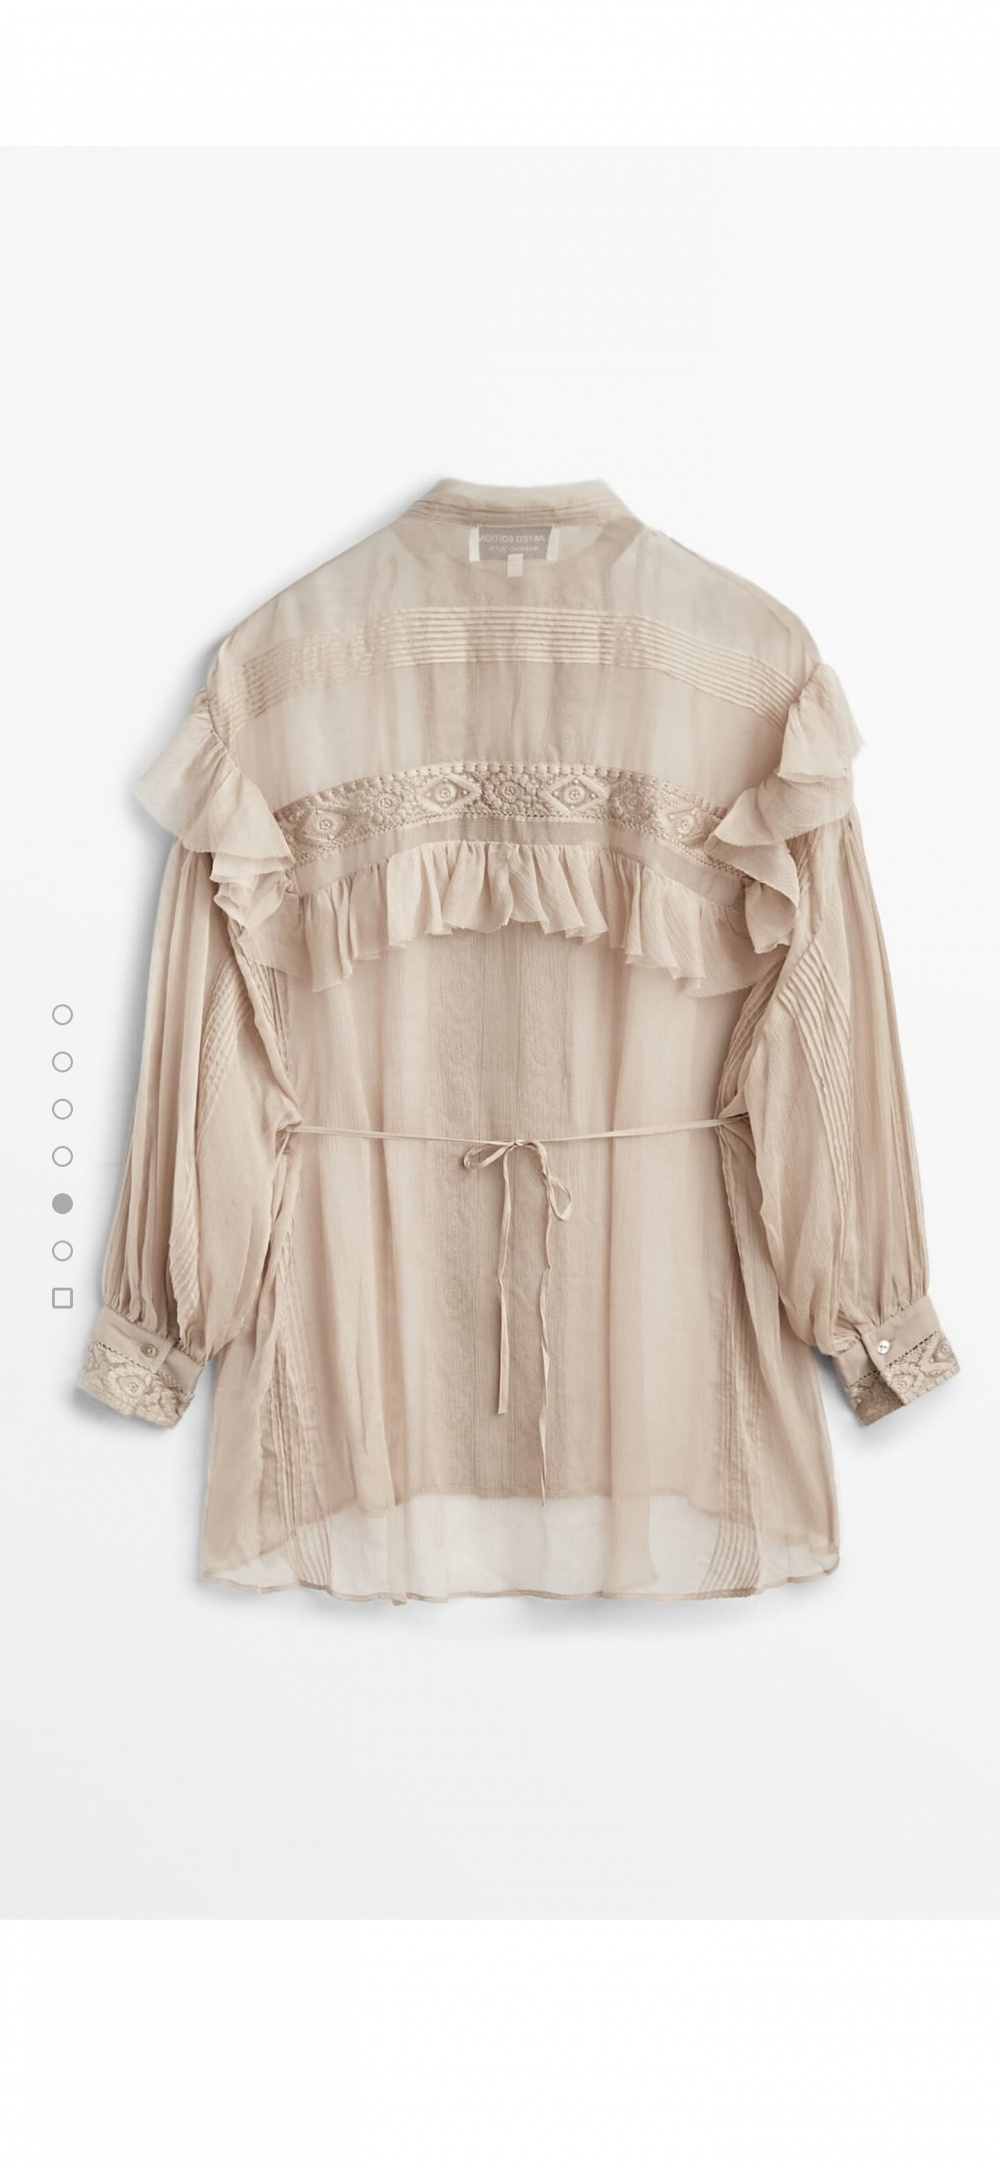 Блуза шелковая  Massimo Dutti limited edition, размер М